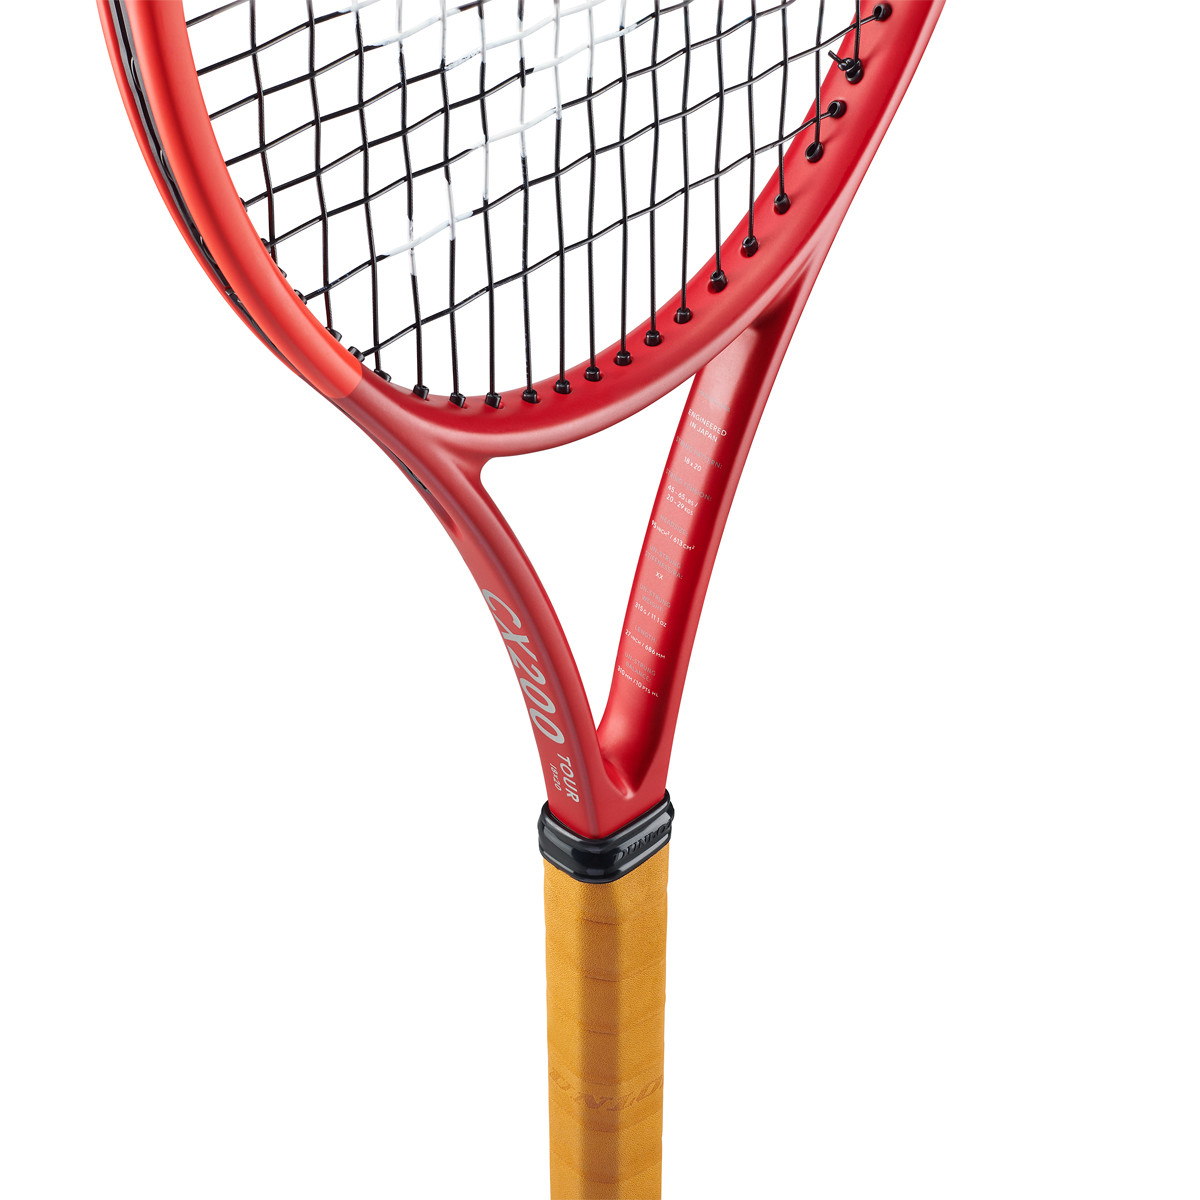 DUNLOP CX 200 TOUR 18*20 (315 GR) RACKET - DUNLOP - Adult Racquets 